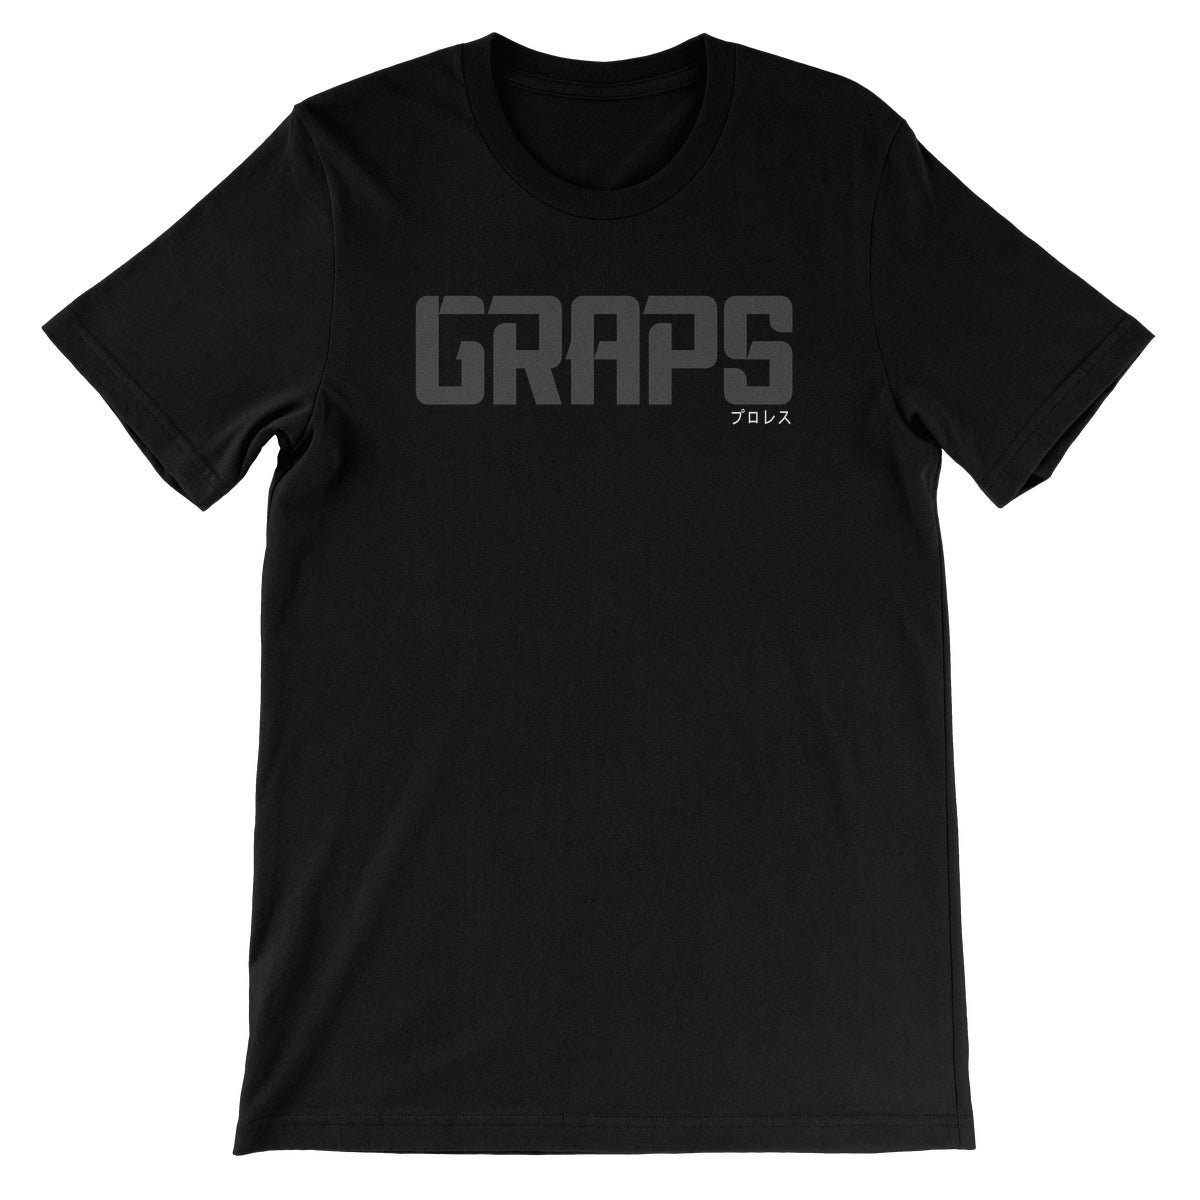 GRAPS - Grey/White Unisex Short Sleeve T-Shirt